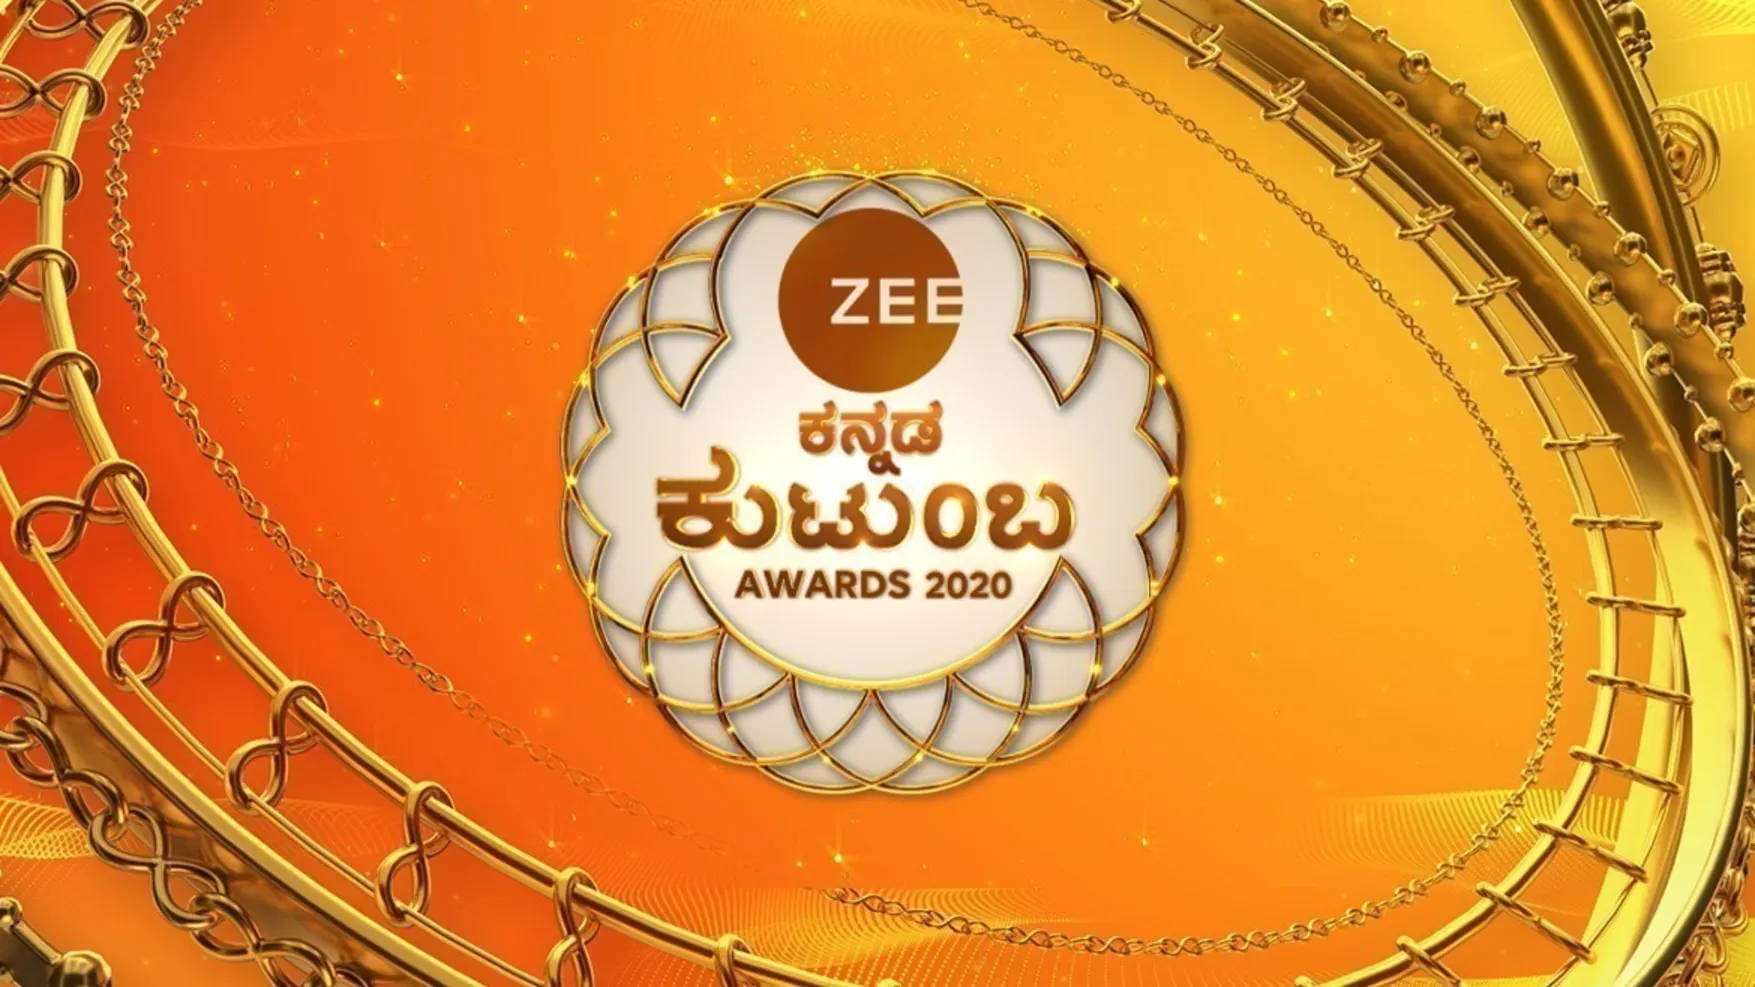 Zee Kannada Projects :: Photos, videos, logos, illustrations and branding  :: Behance